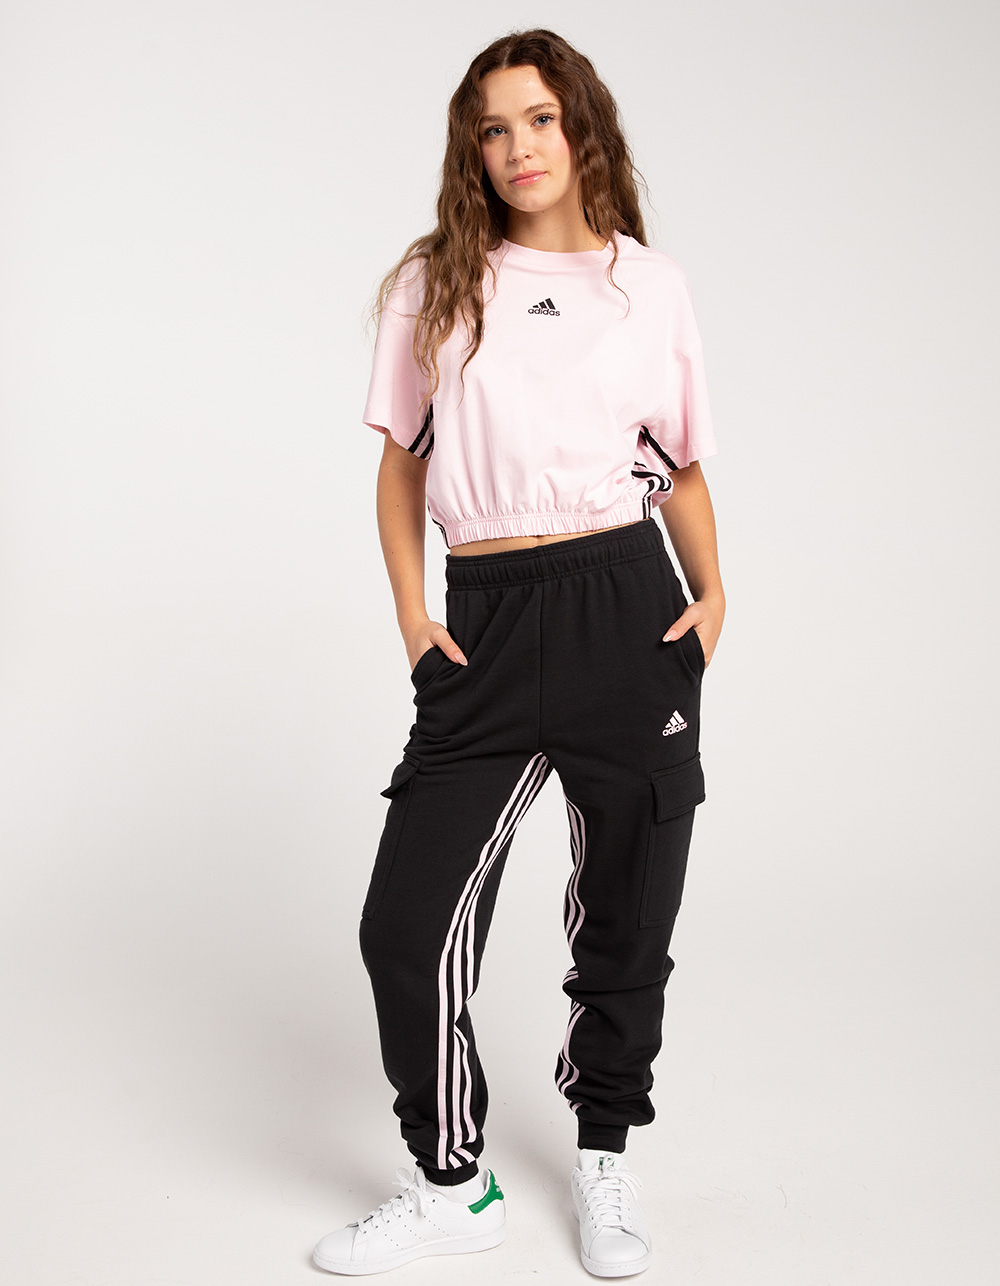 Adidas Originals Black/White 3 Stripe Women's Leggings (XS) New With Tags 